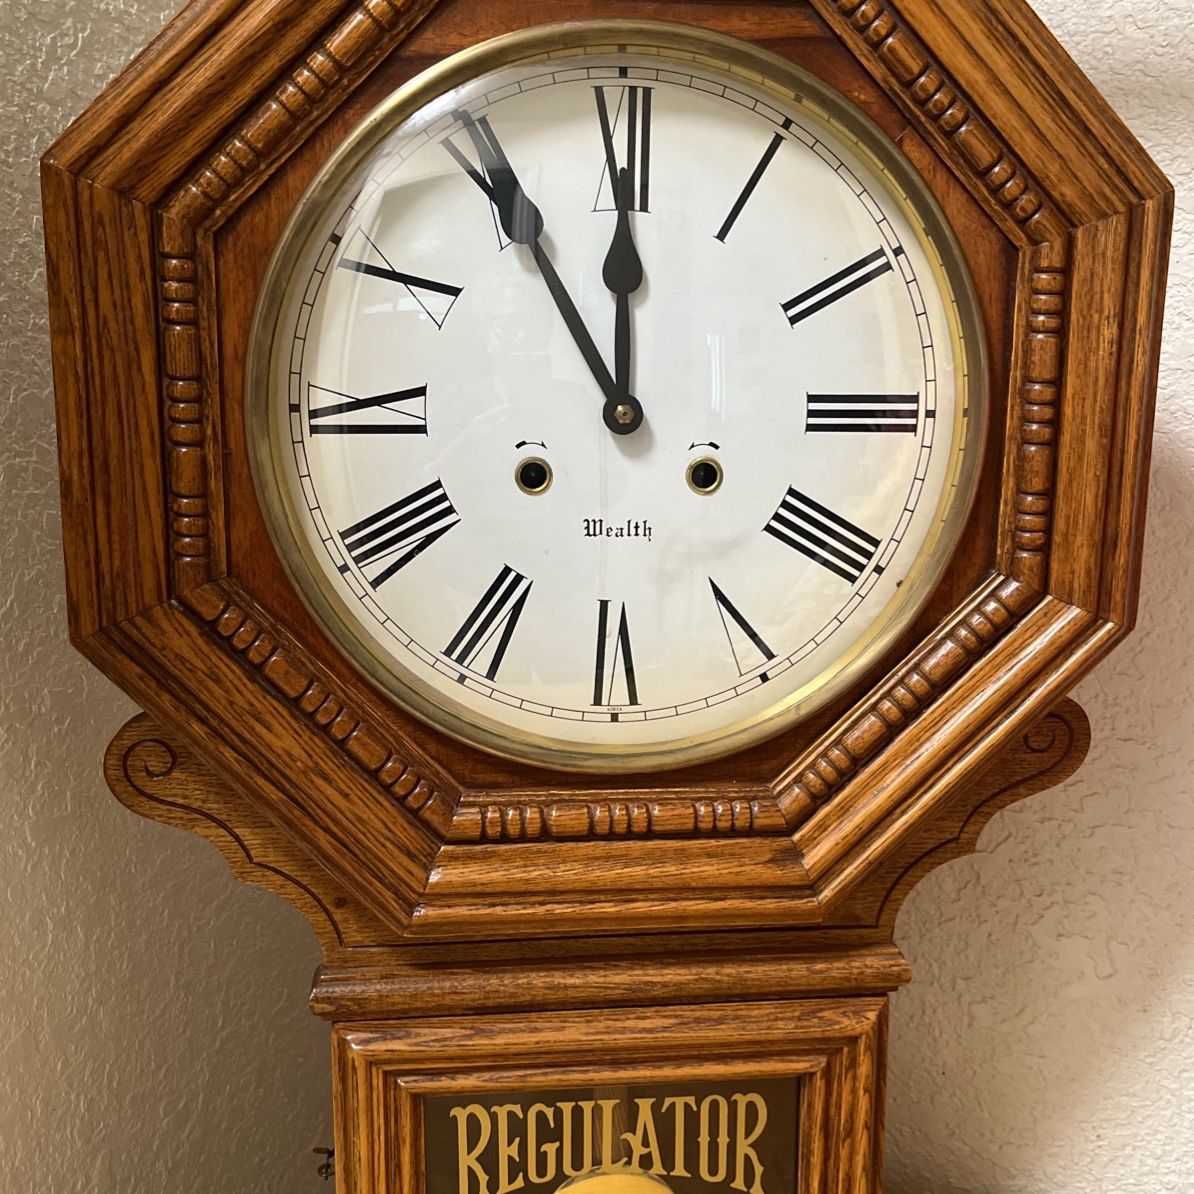 Wealth Regulator, Antique Wall Clock.